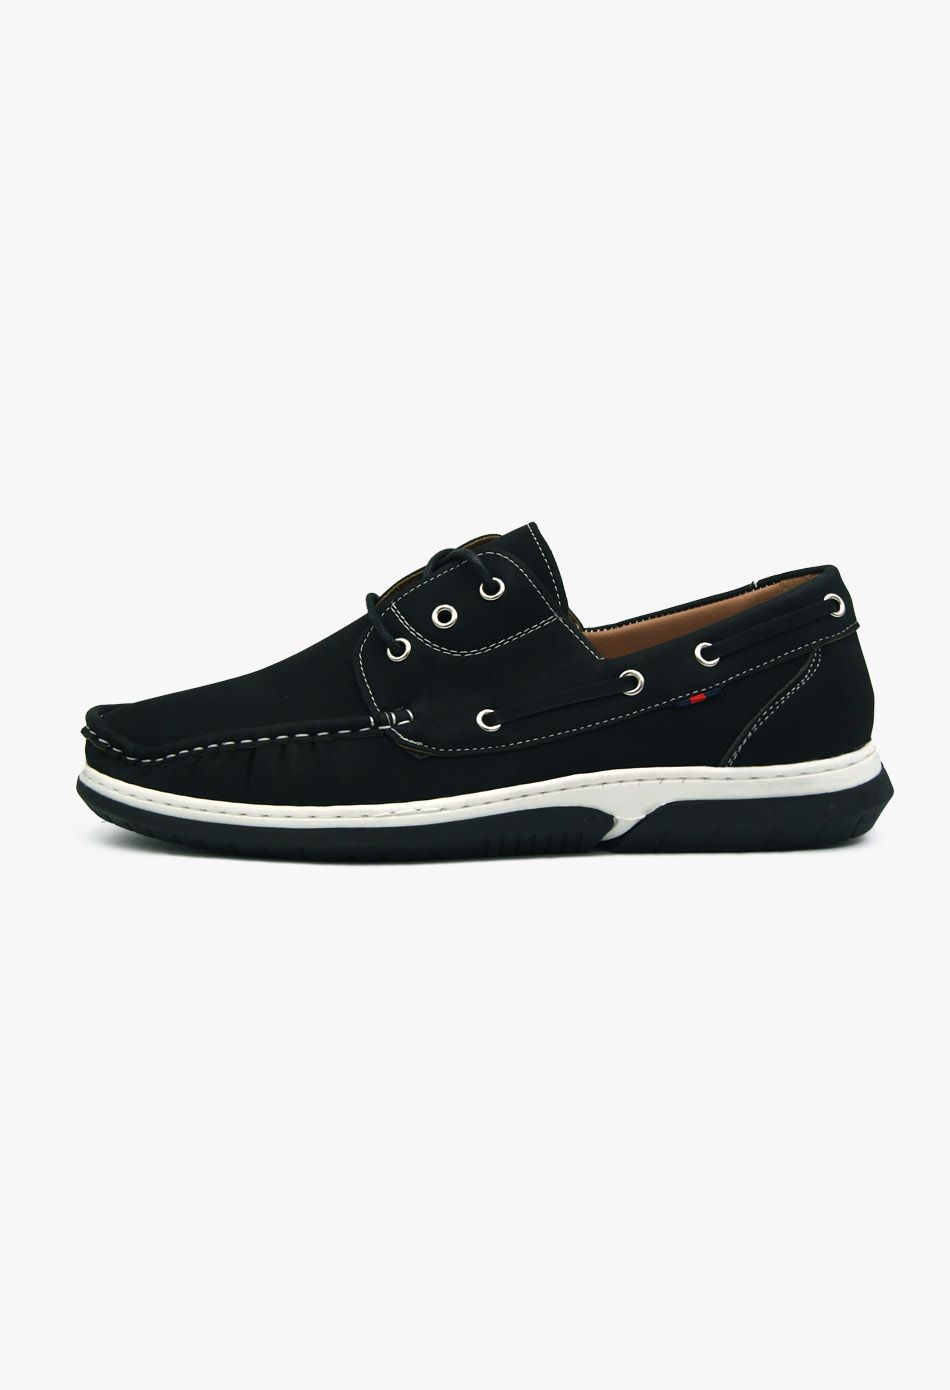 Suede Ανδρικά Boat Shoes σε Μαύρο Χρώμα / 9813-black ΑΝΔΡΙΚΑ ΠΑΠΟΥΤΣΙΑ joya.gr